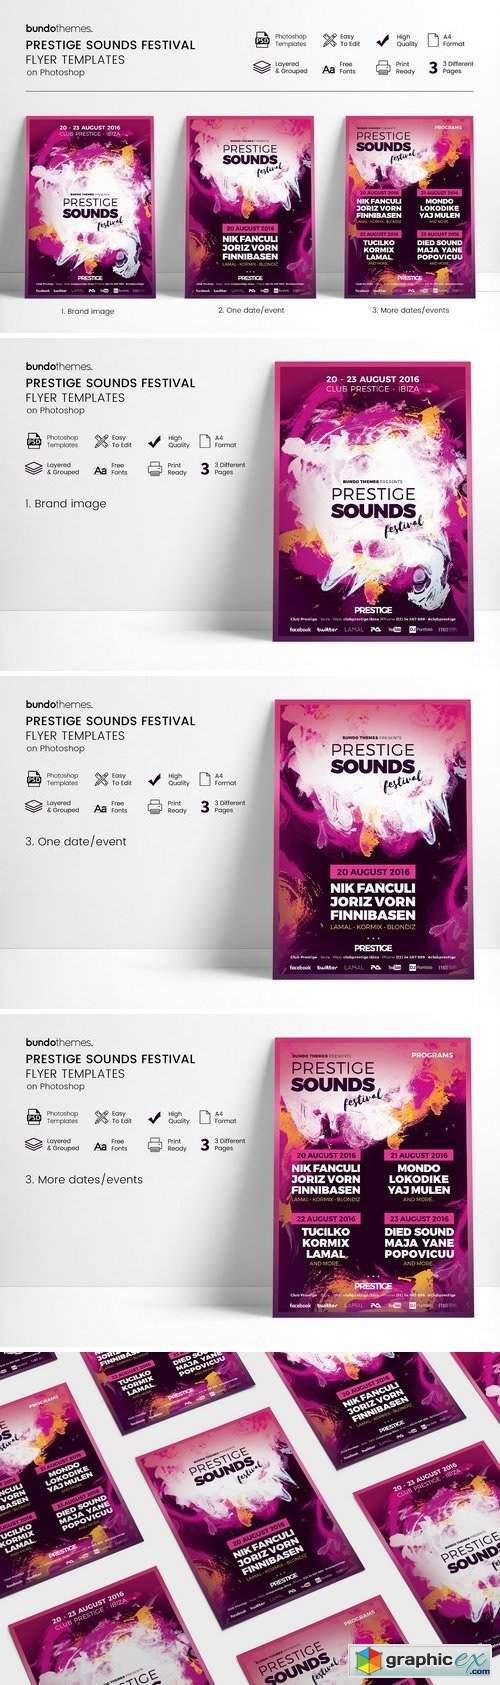 Prestige Sounds Festival Flyer